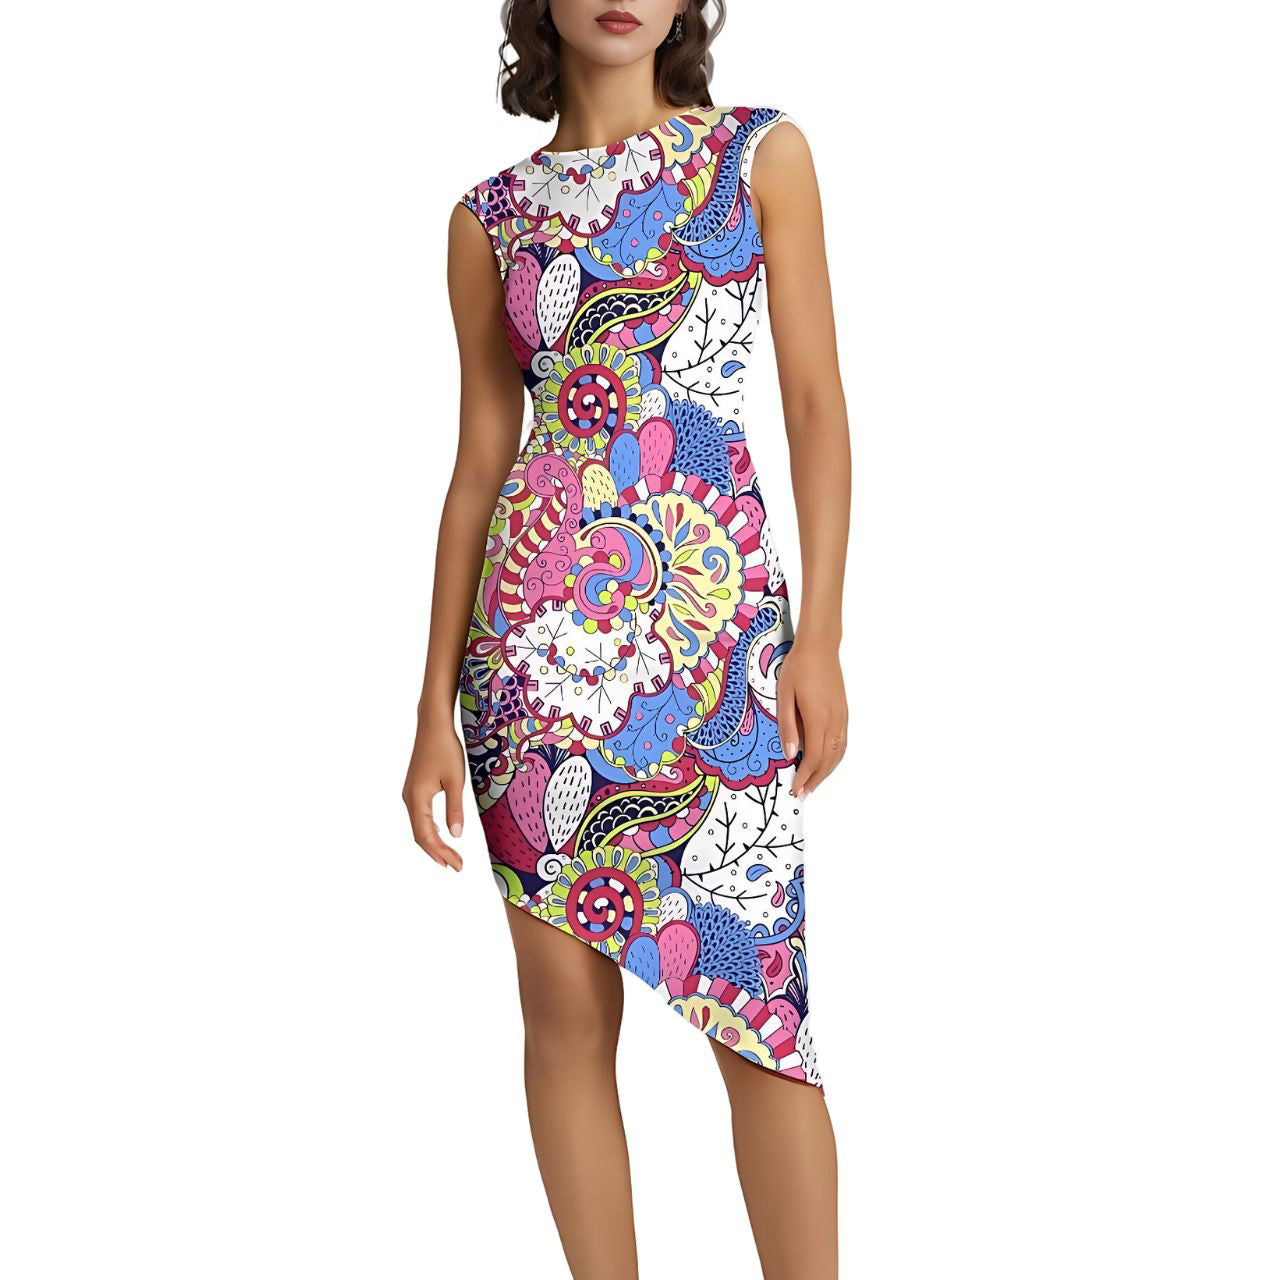 Sechia Eye-catching designer dress Psychedelic pattern Knee Length Asymmetrical Sleeveless sheath Cocktail Paisley Floral Vibrant Bold Blissfully Brand